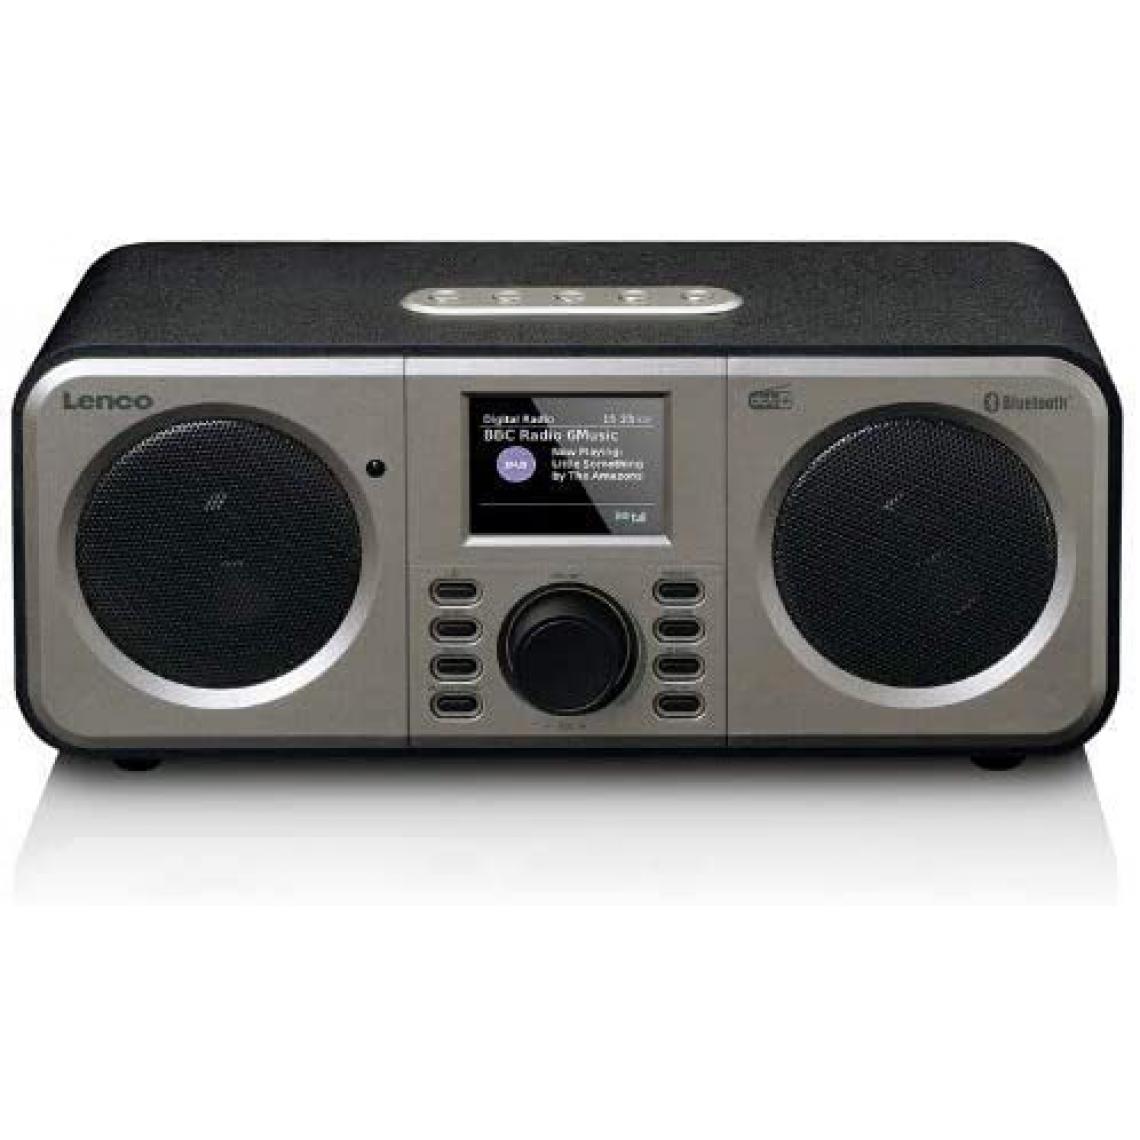 Lenco - radio Internet Dab+ FM Bluetooth avec écran noir gris - Radio